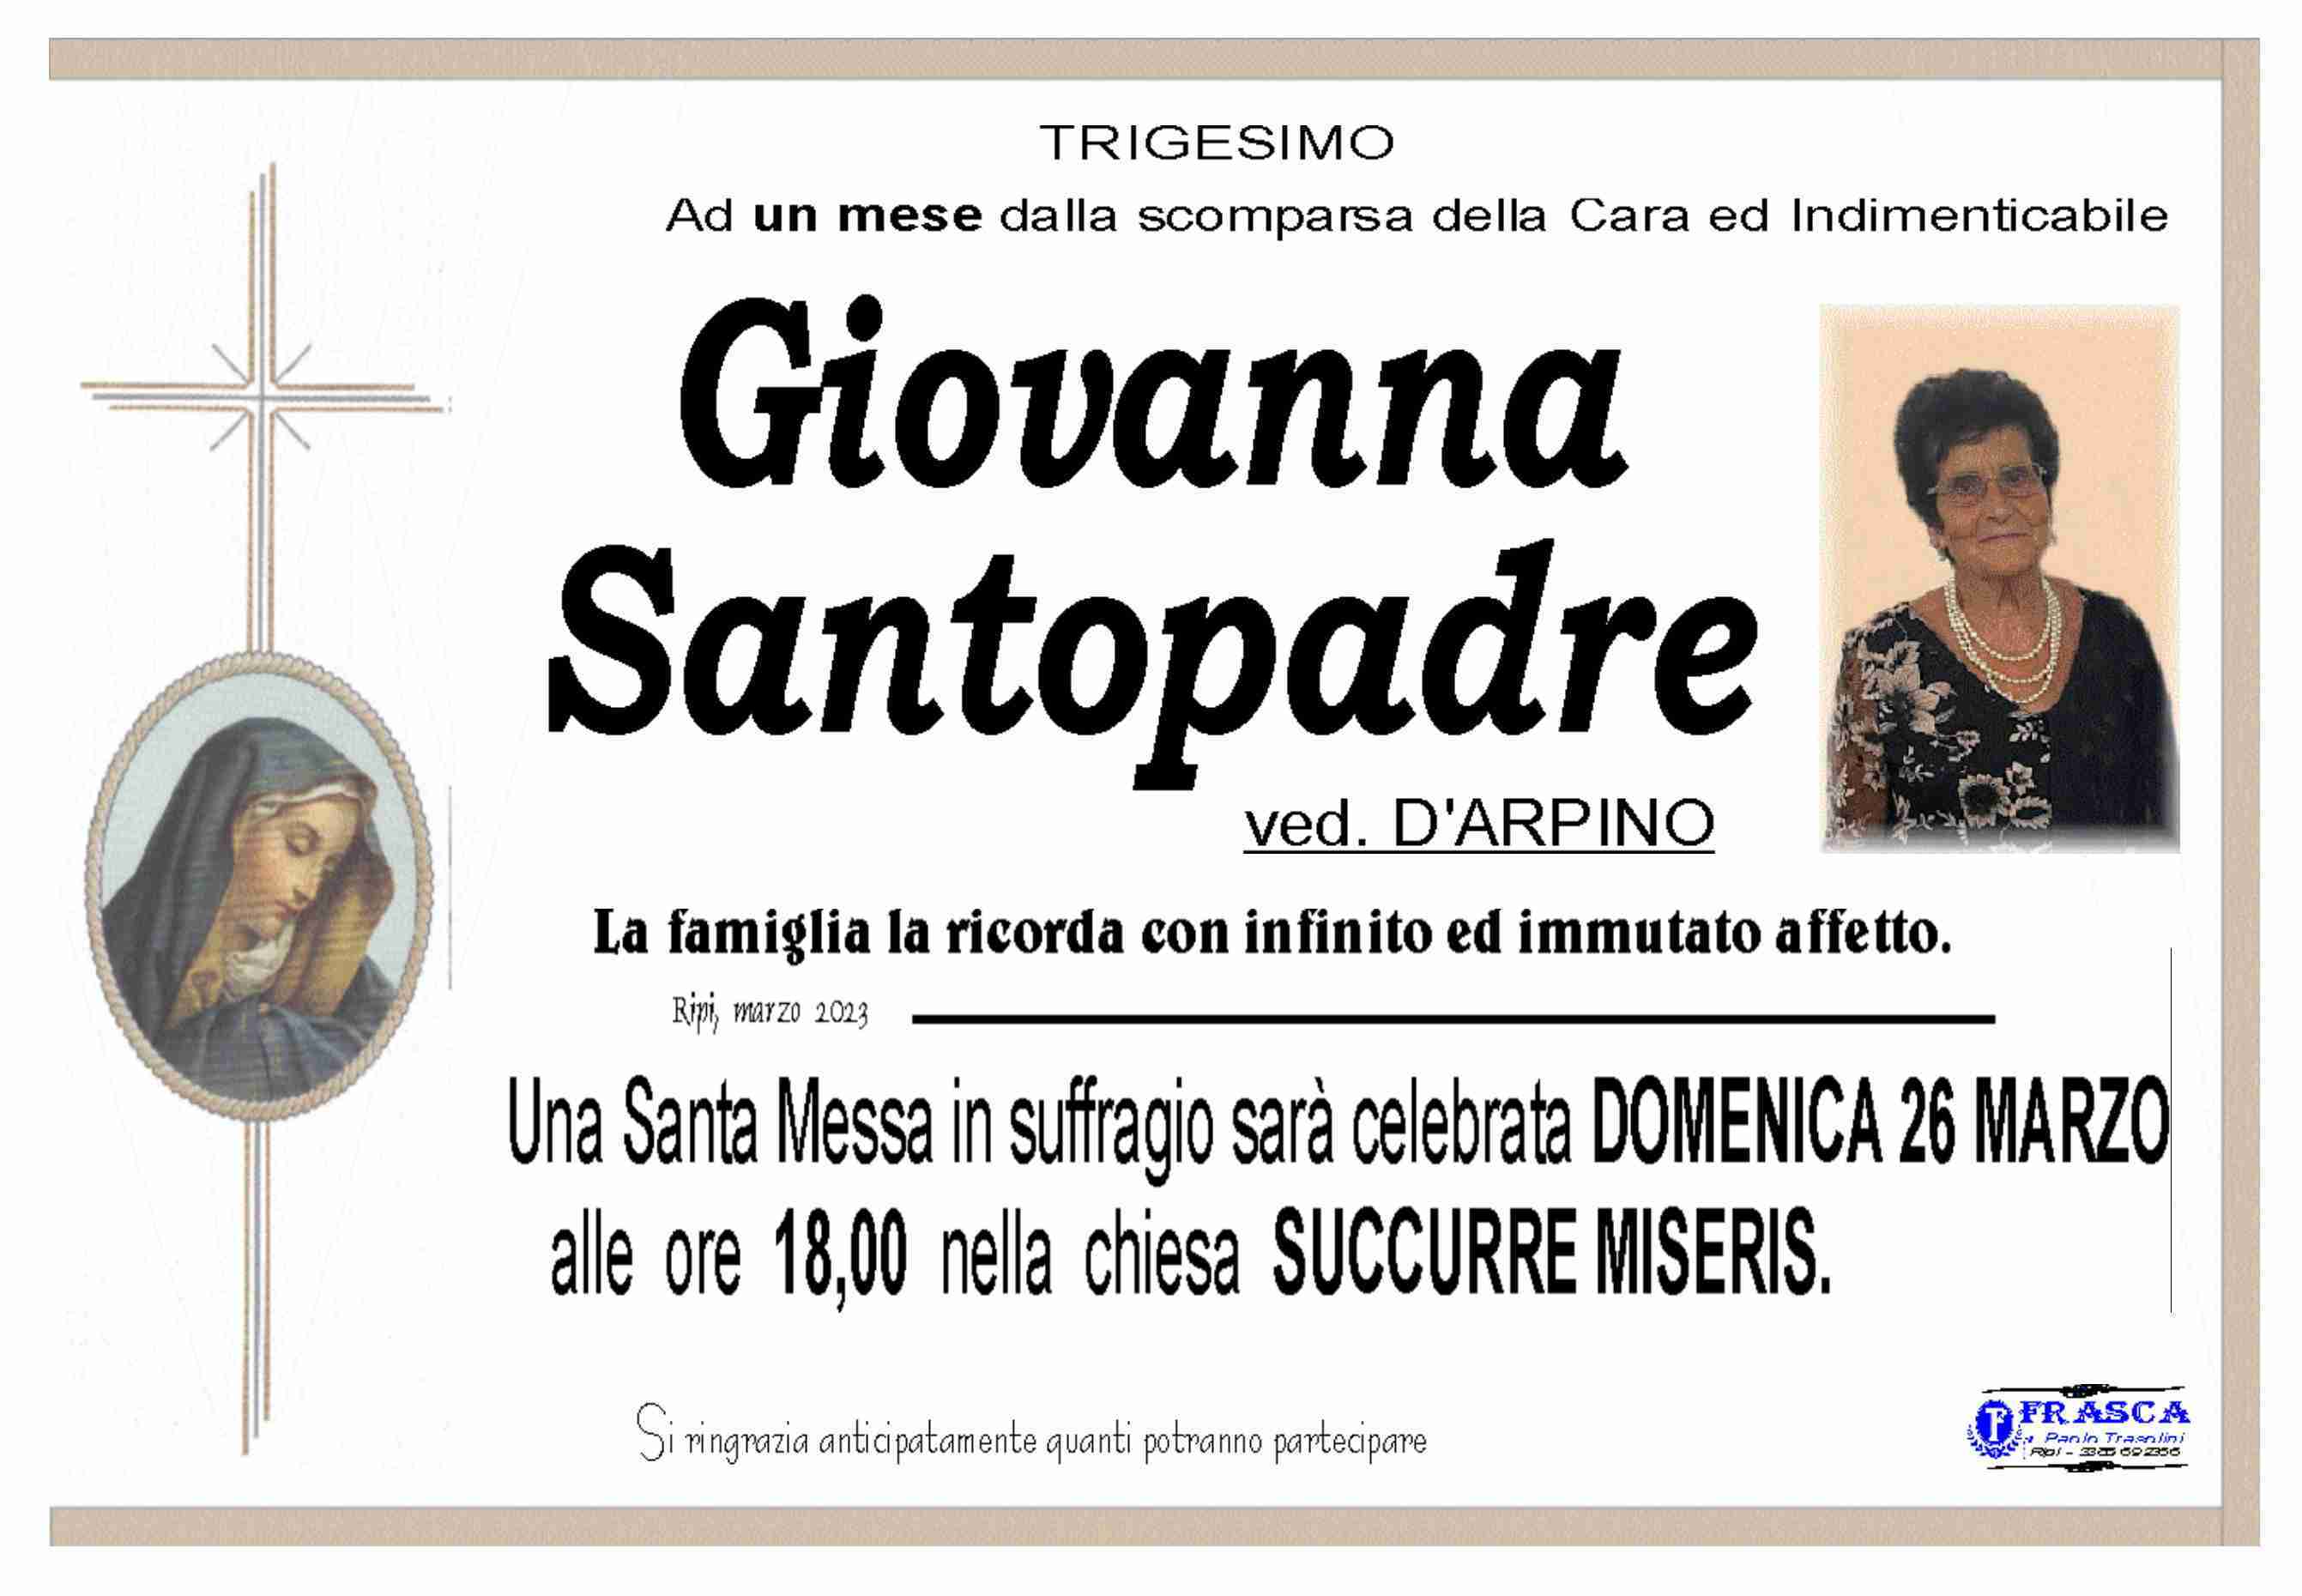 Giovanna Santopadre